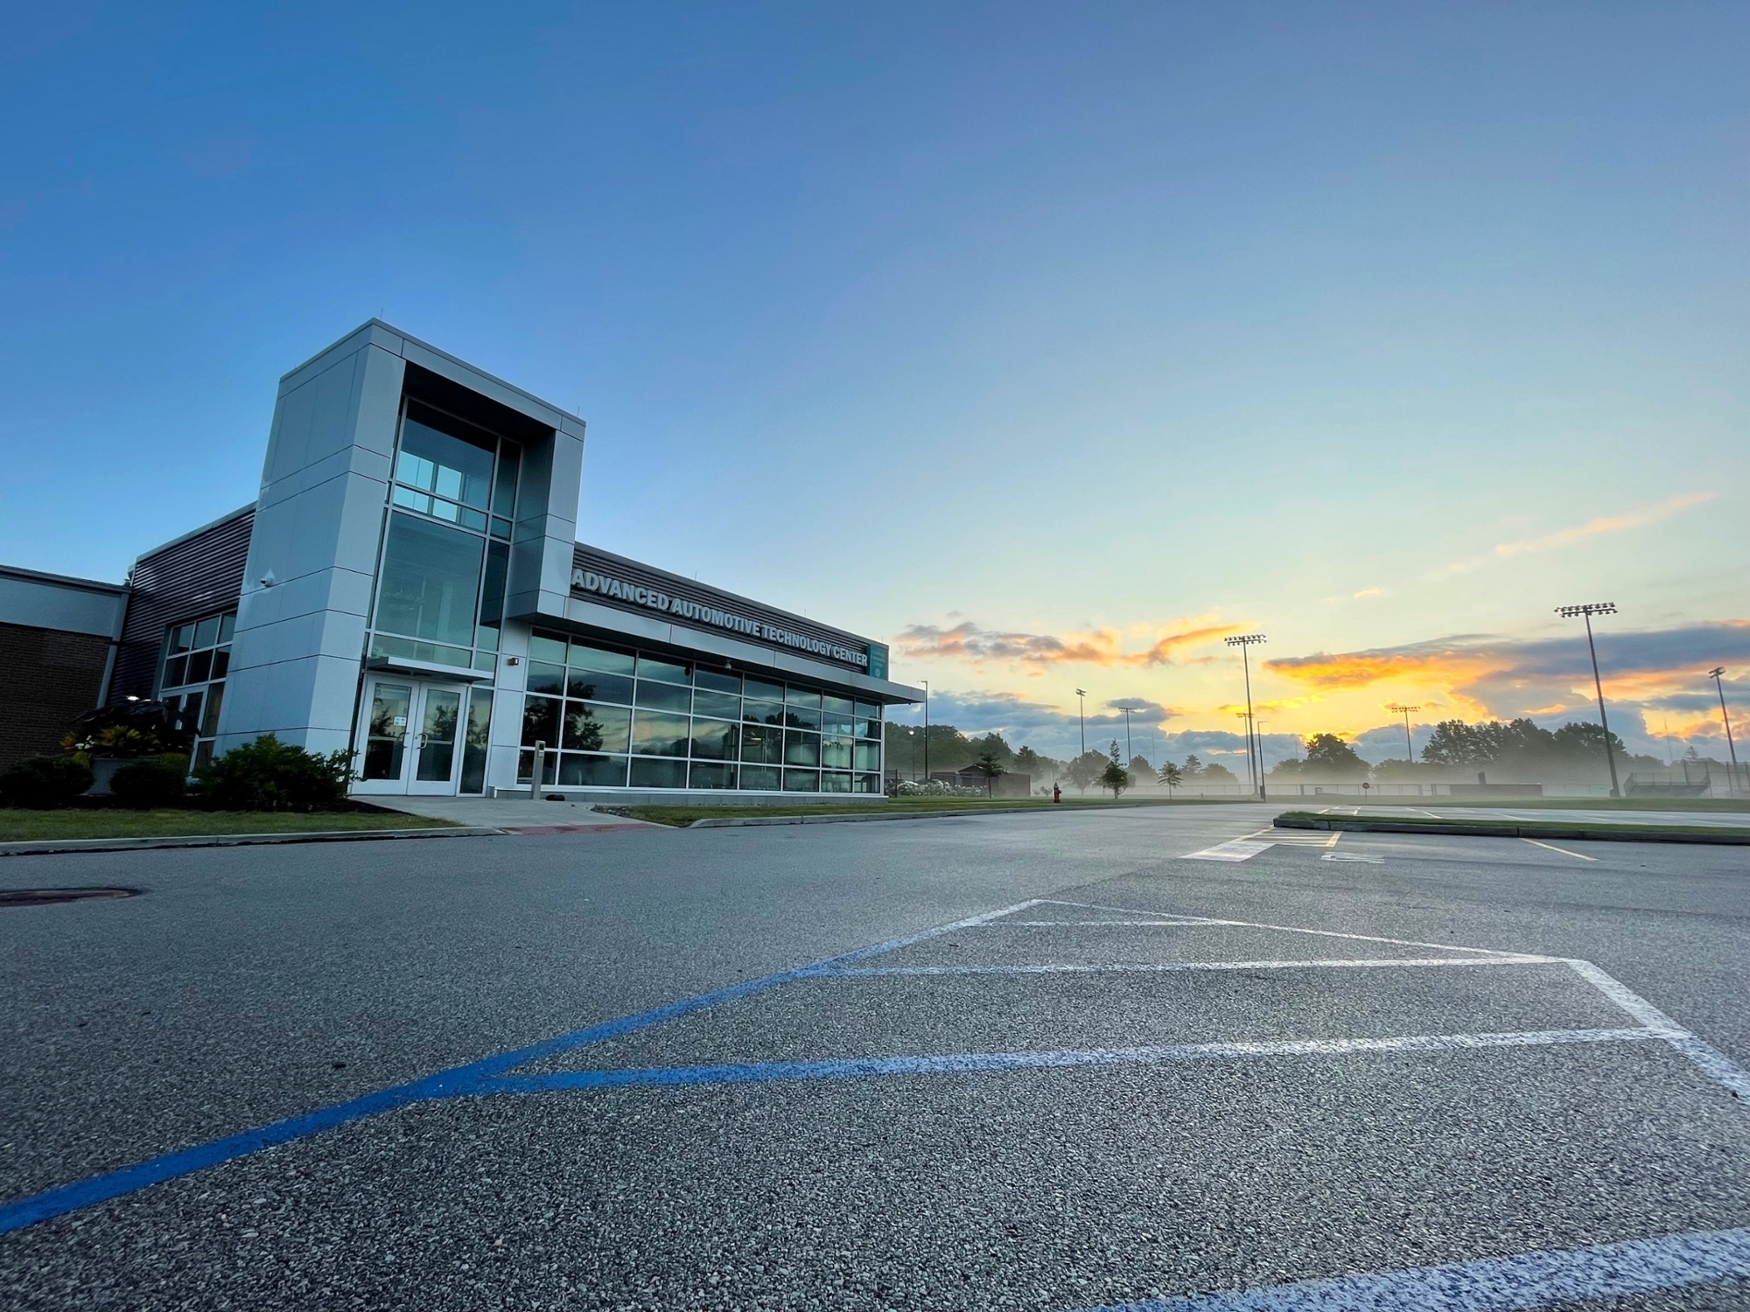 Sunrise at the Advanced Automotive Technology Center